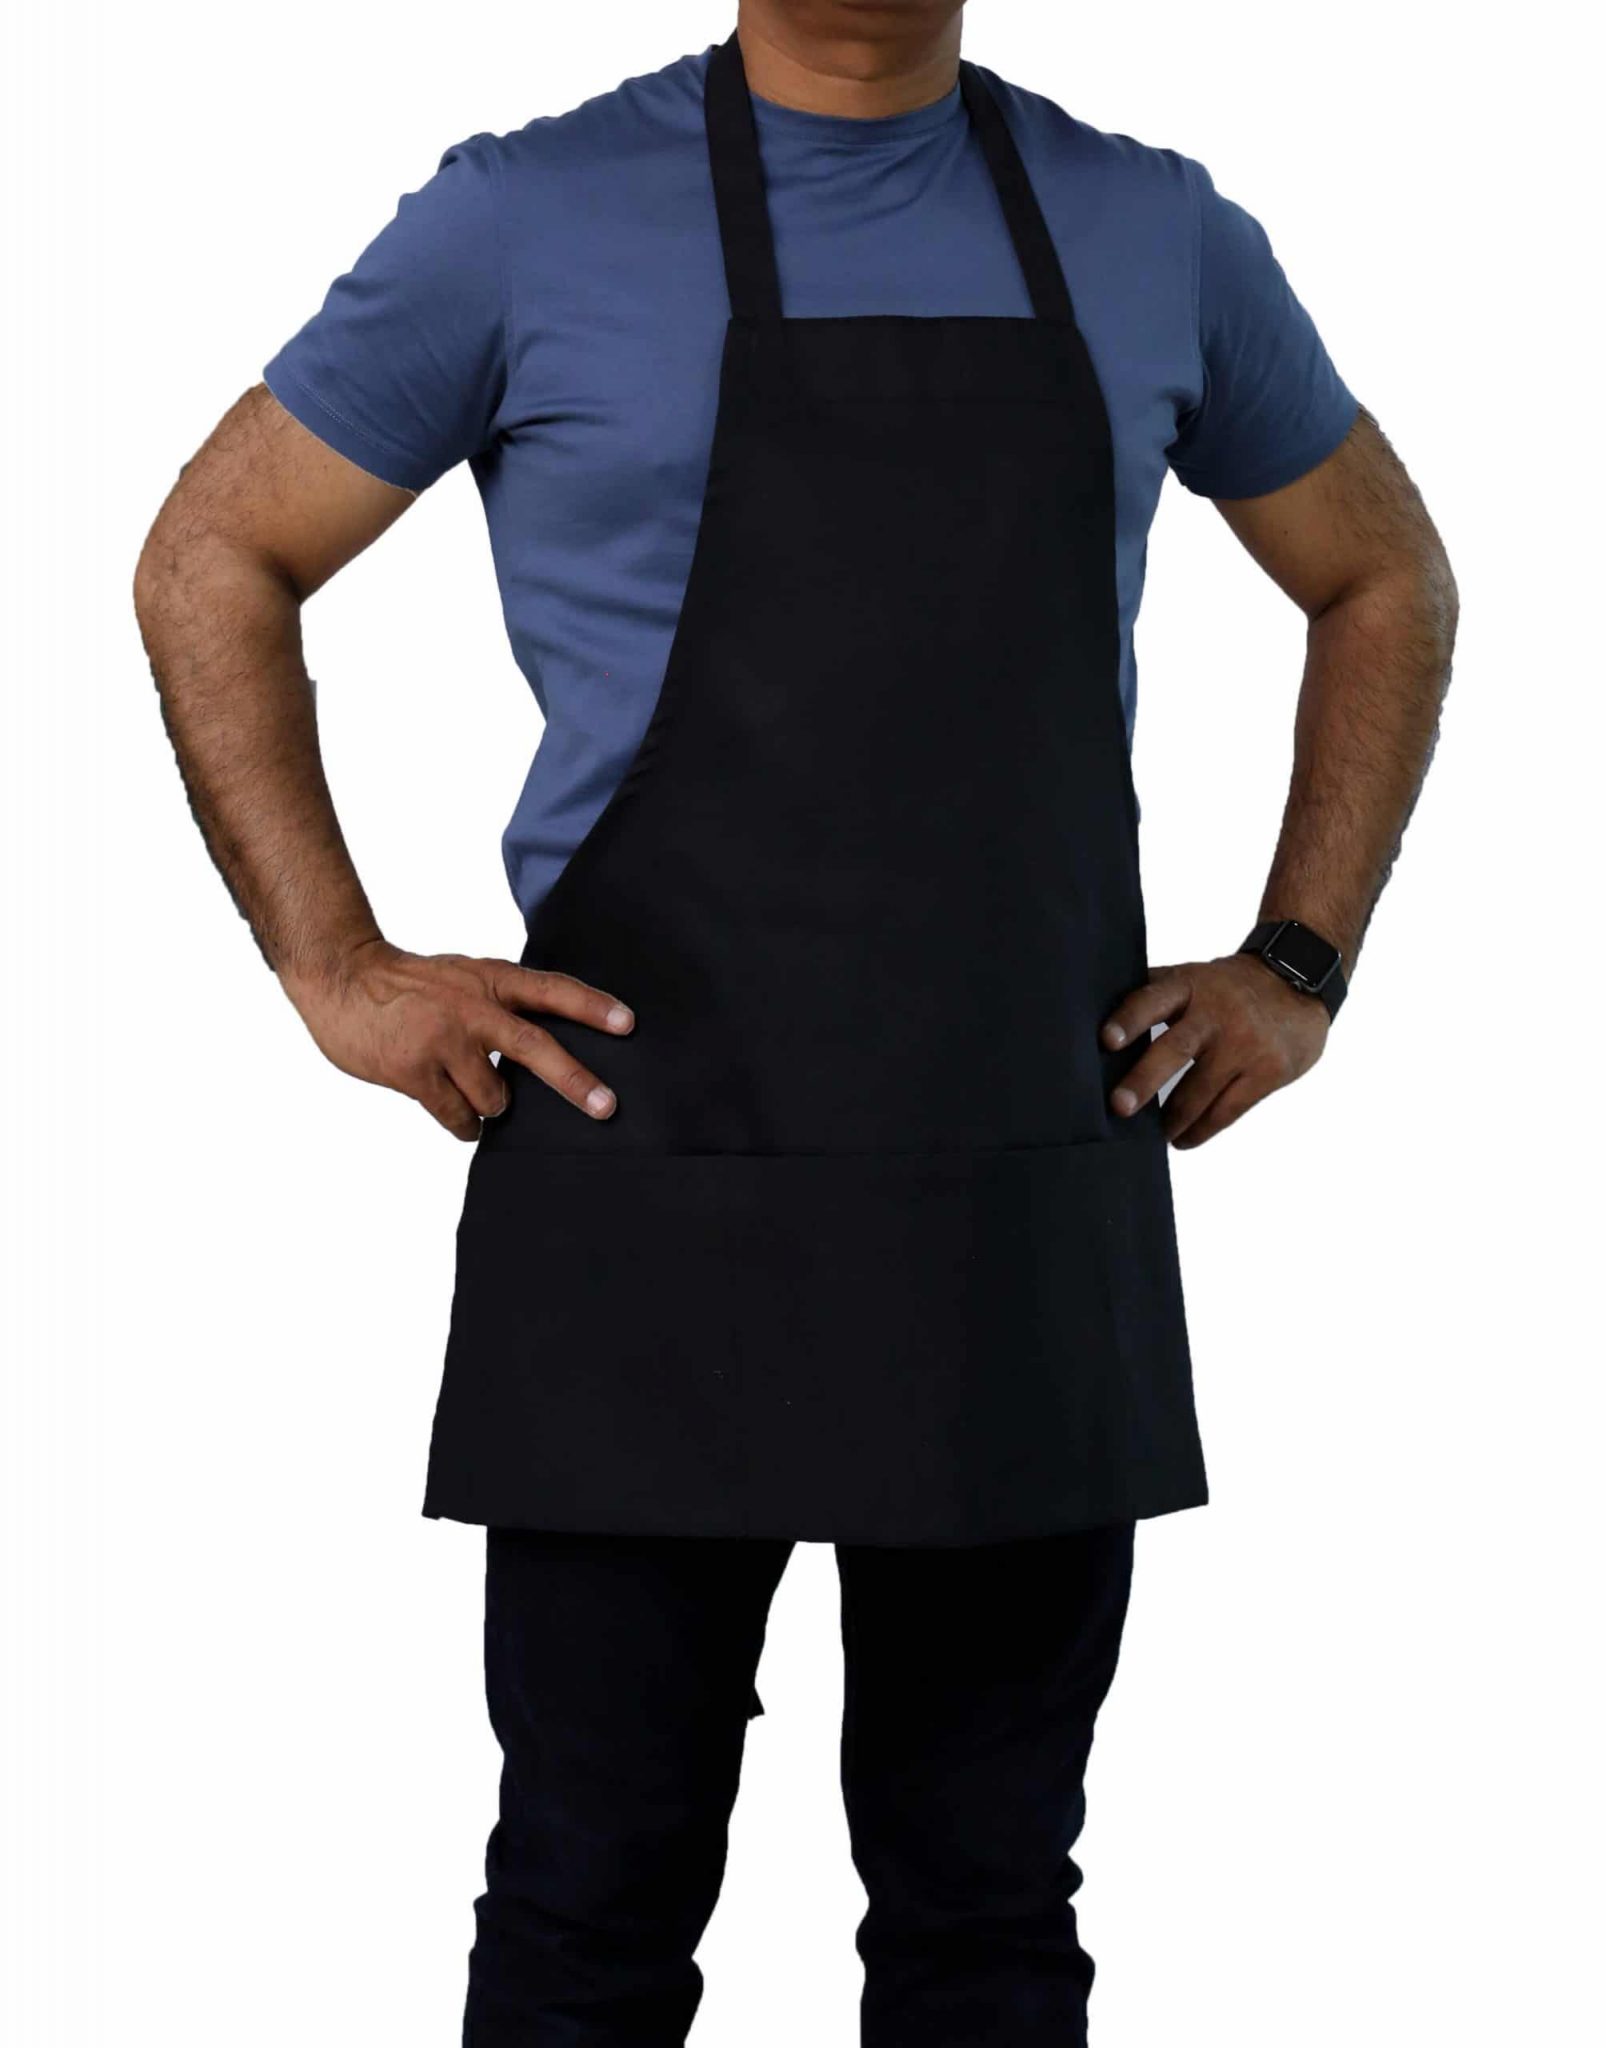 Whites Professional Black Bib Apron Polycotton Kitchen Food Chef Waiter Apron